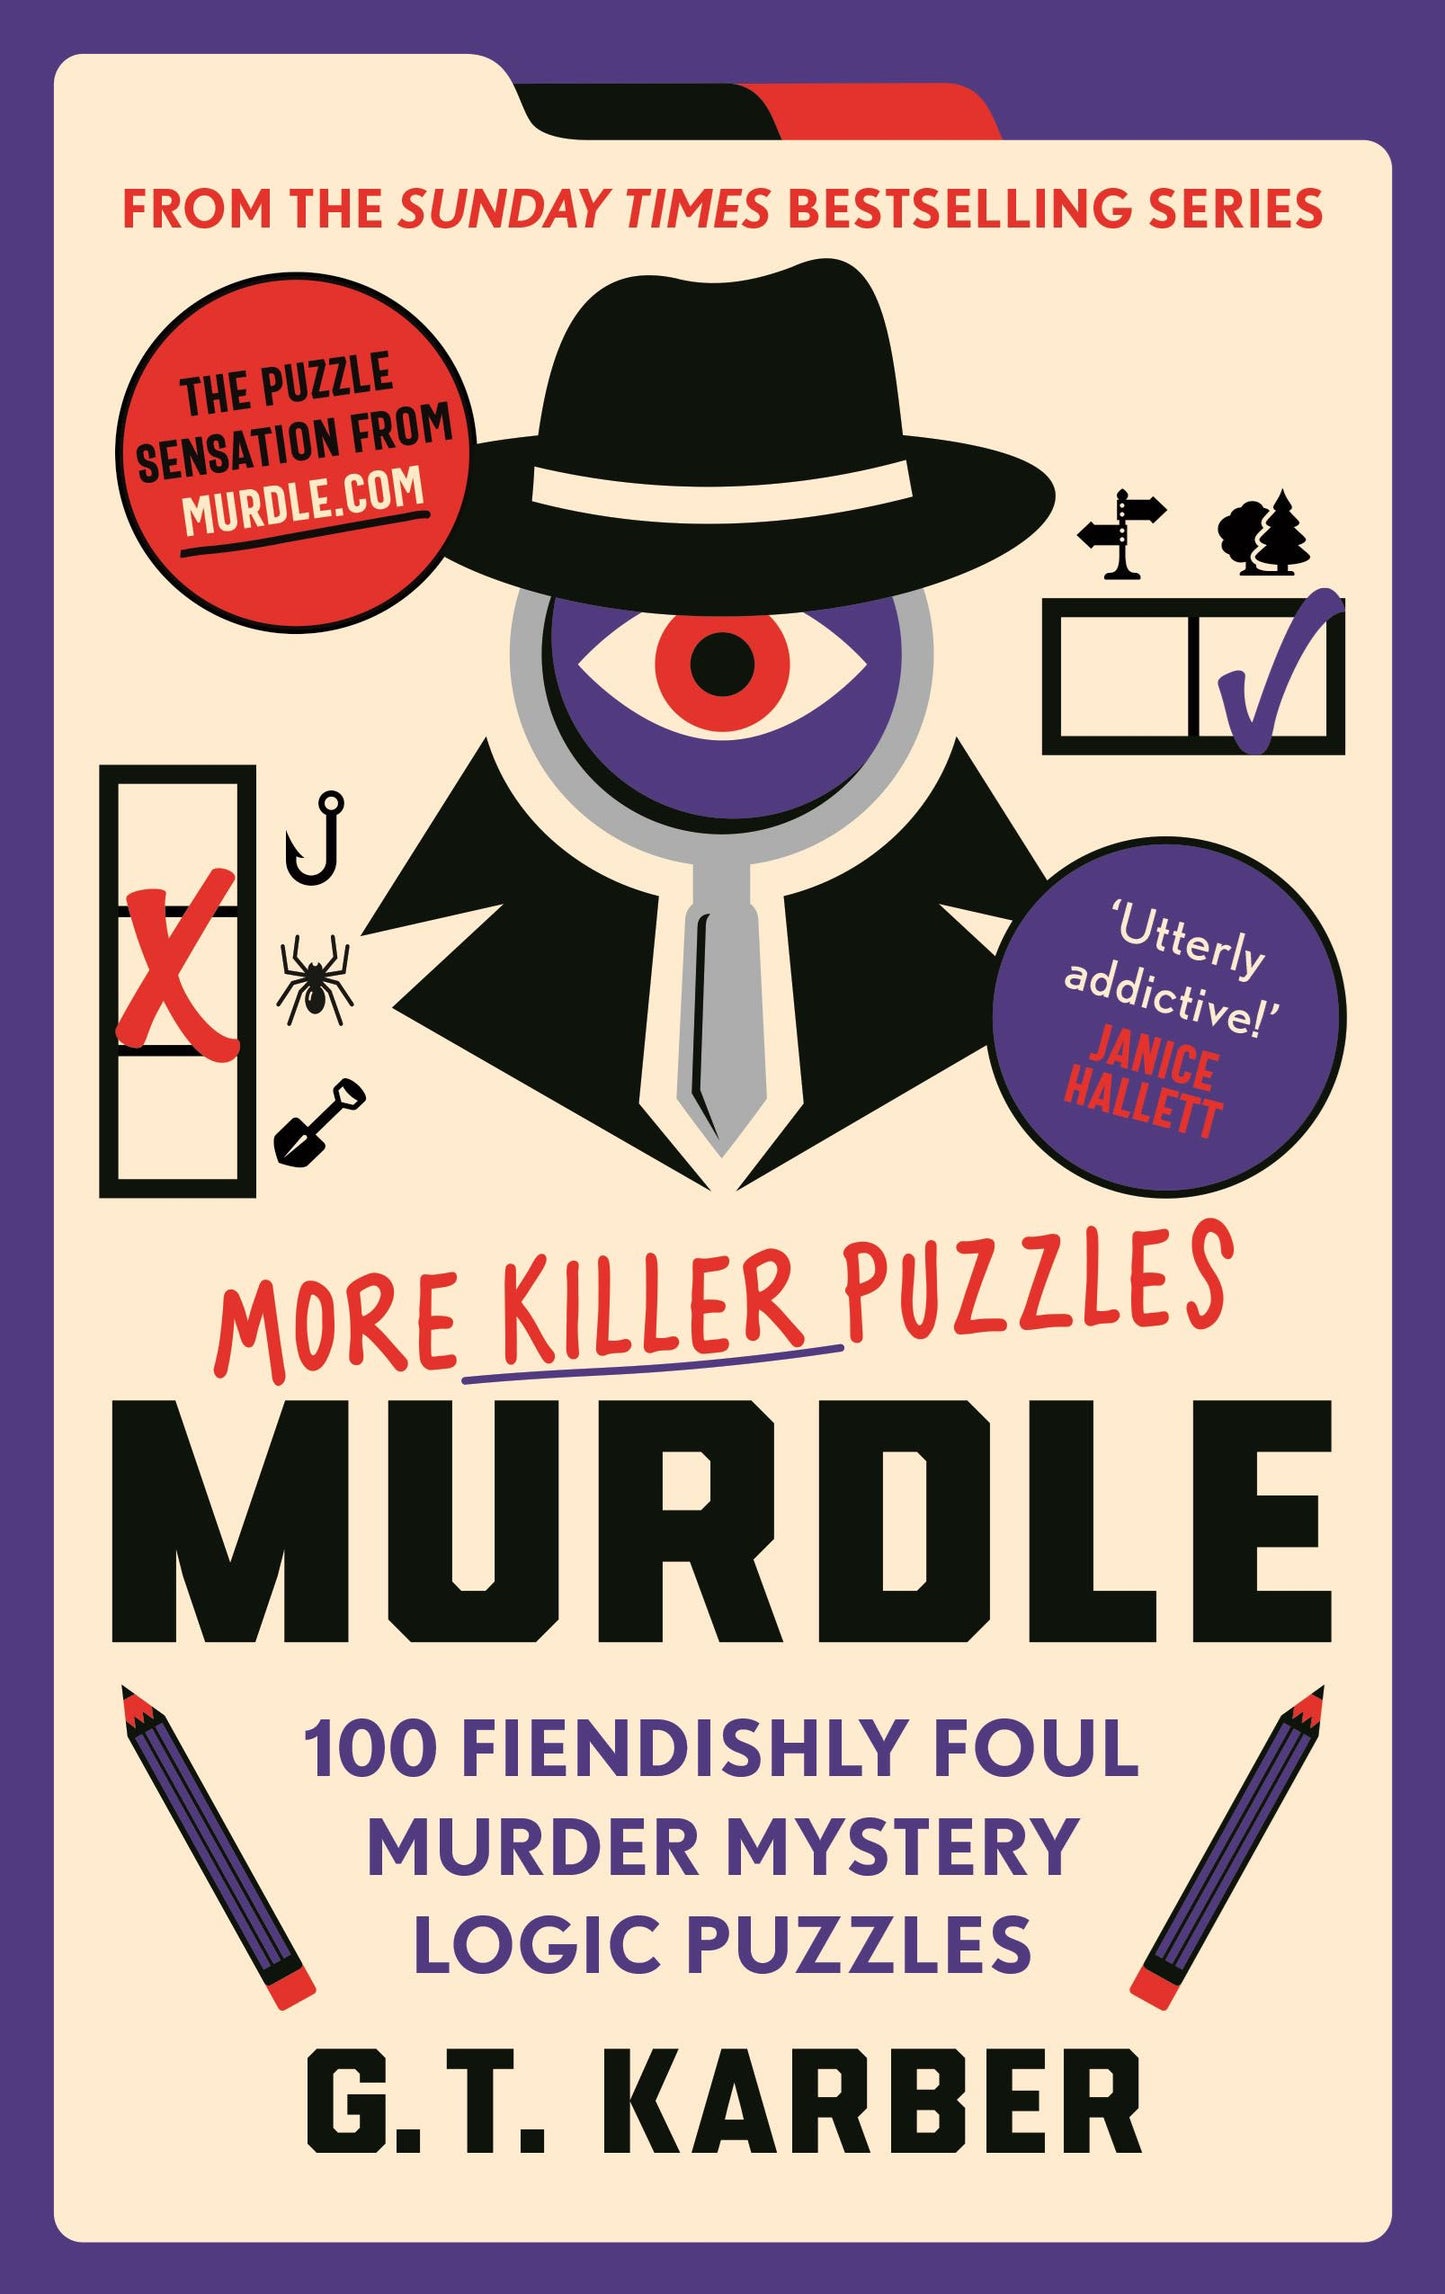 Murdle Vol 2 - More Killer Puzzles